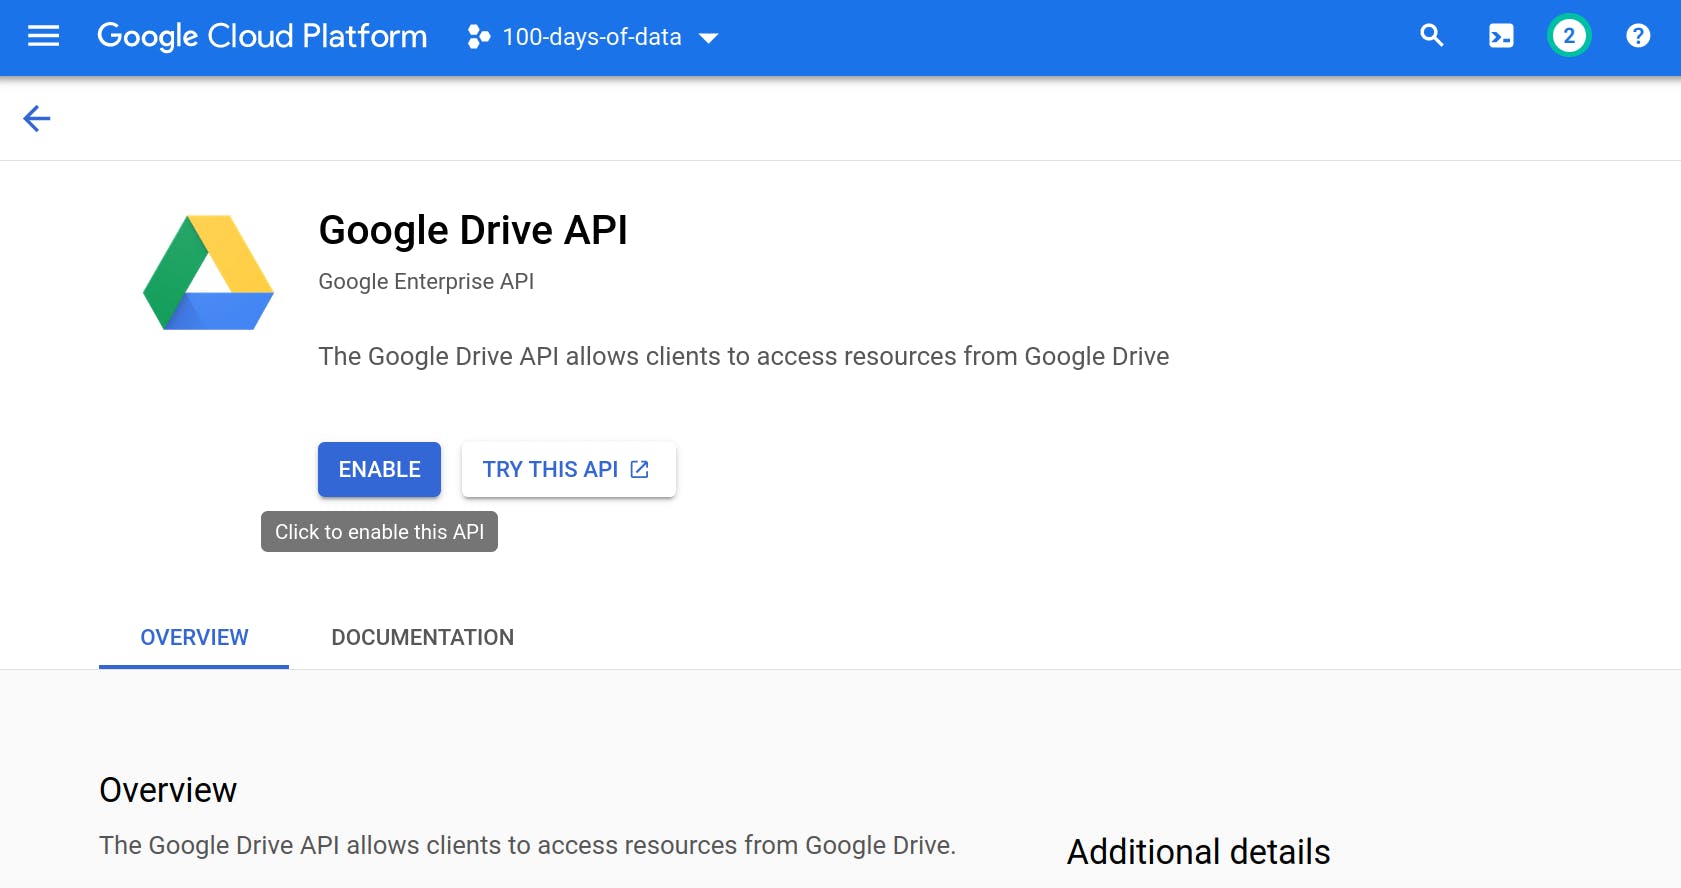 Enable the Google Drive API